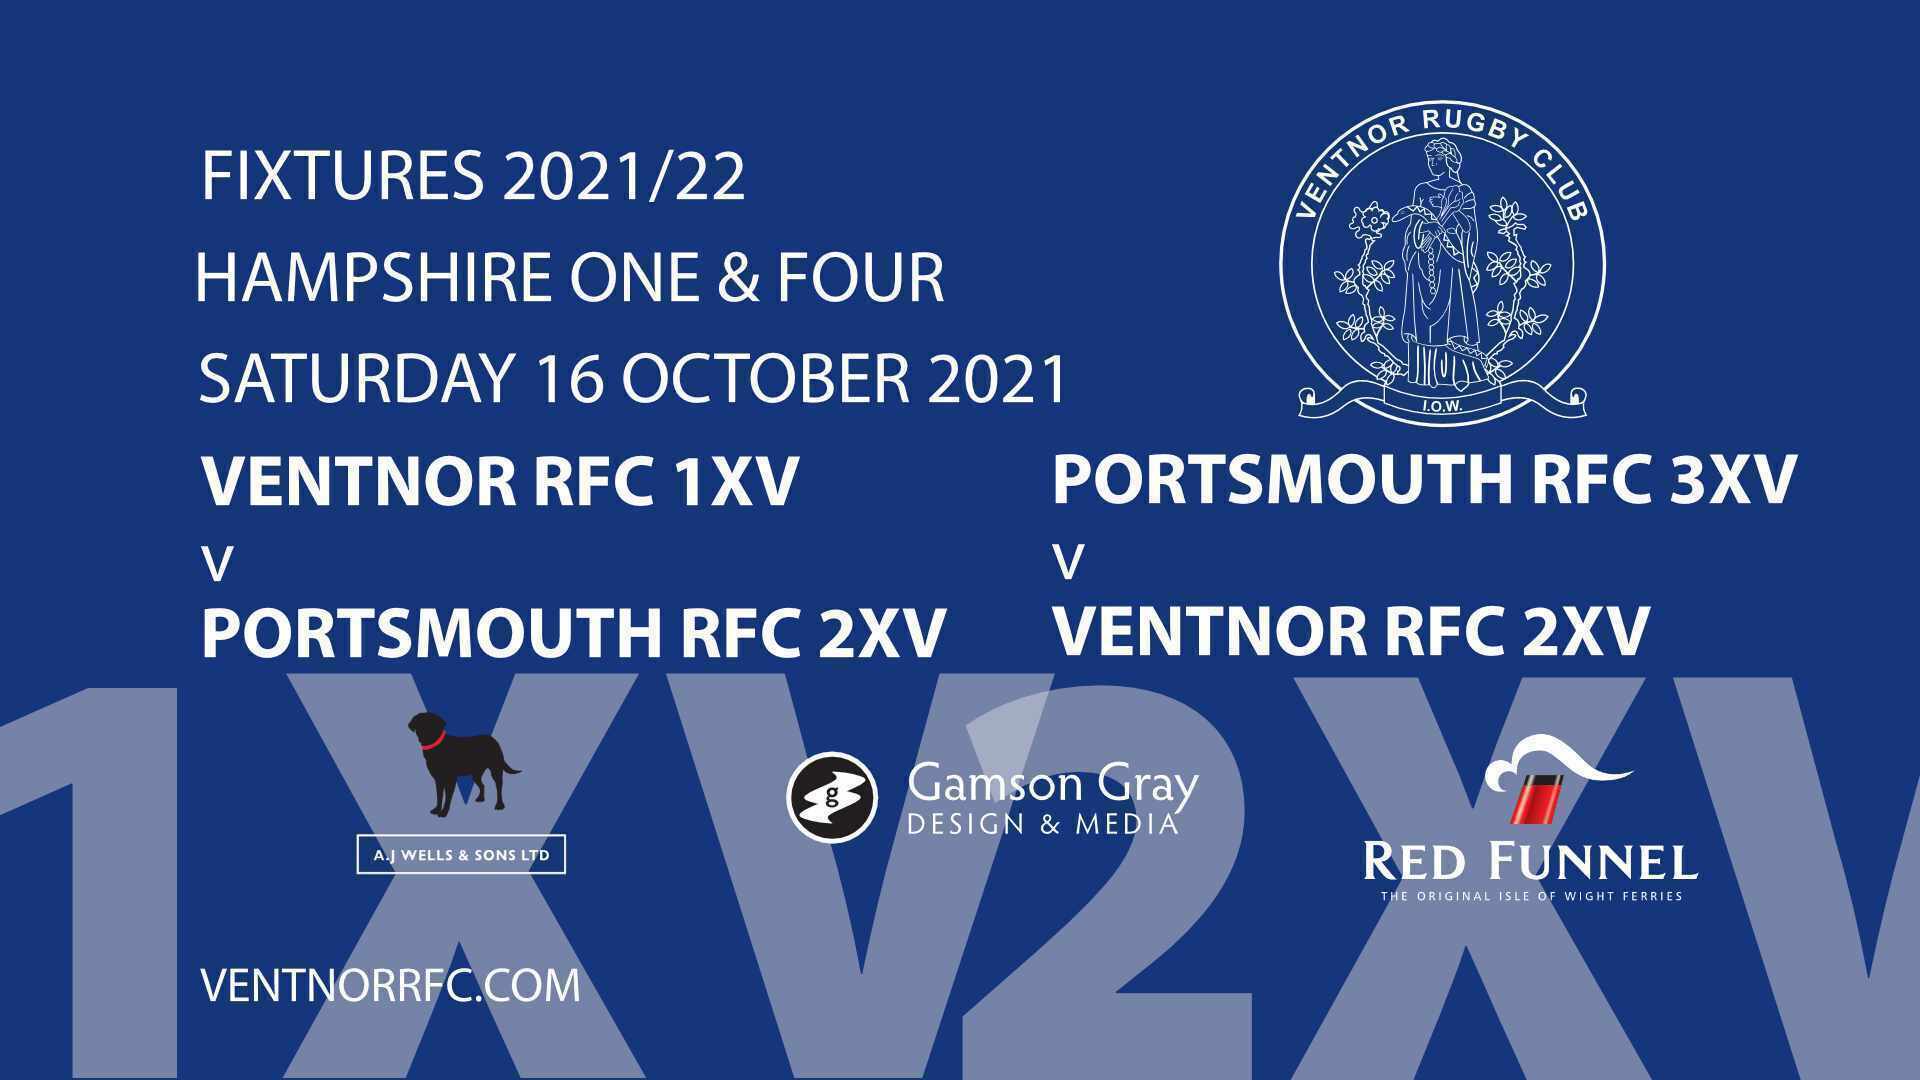 Ventnor RFC Rugby this Saturday 16 October 2021